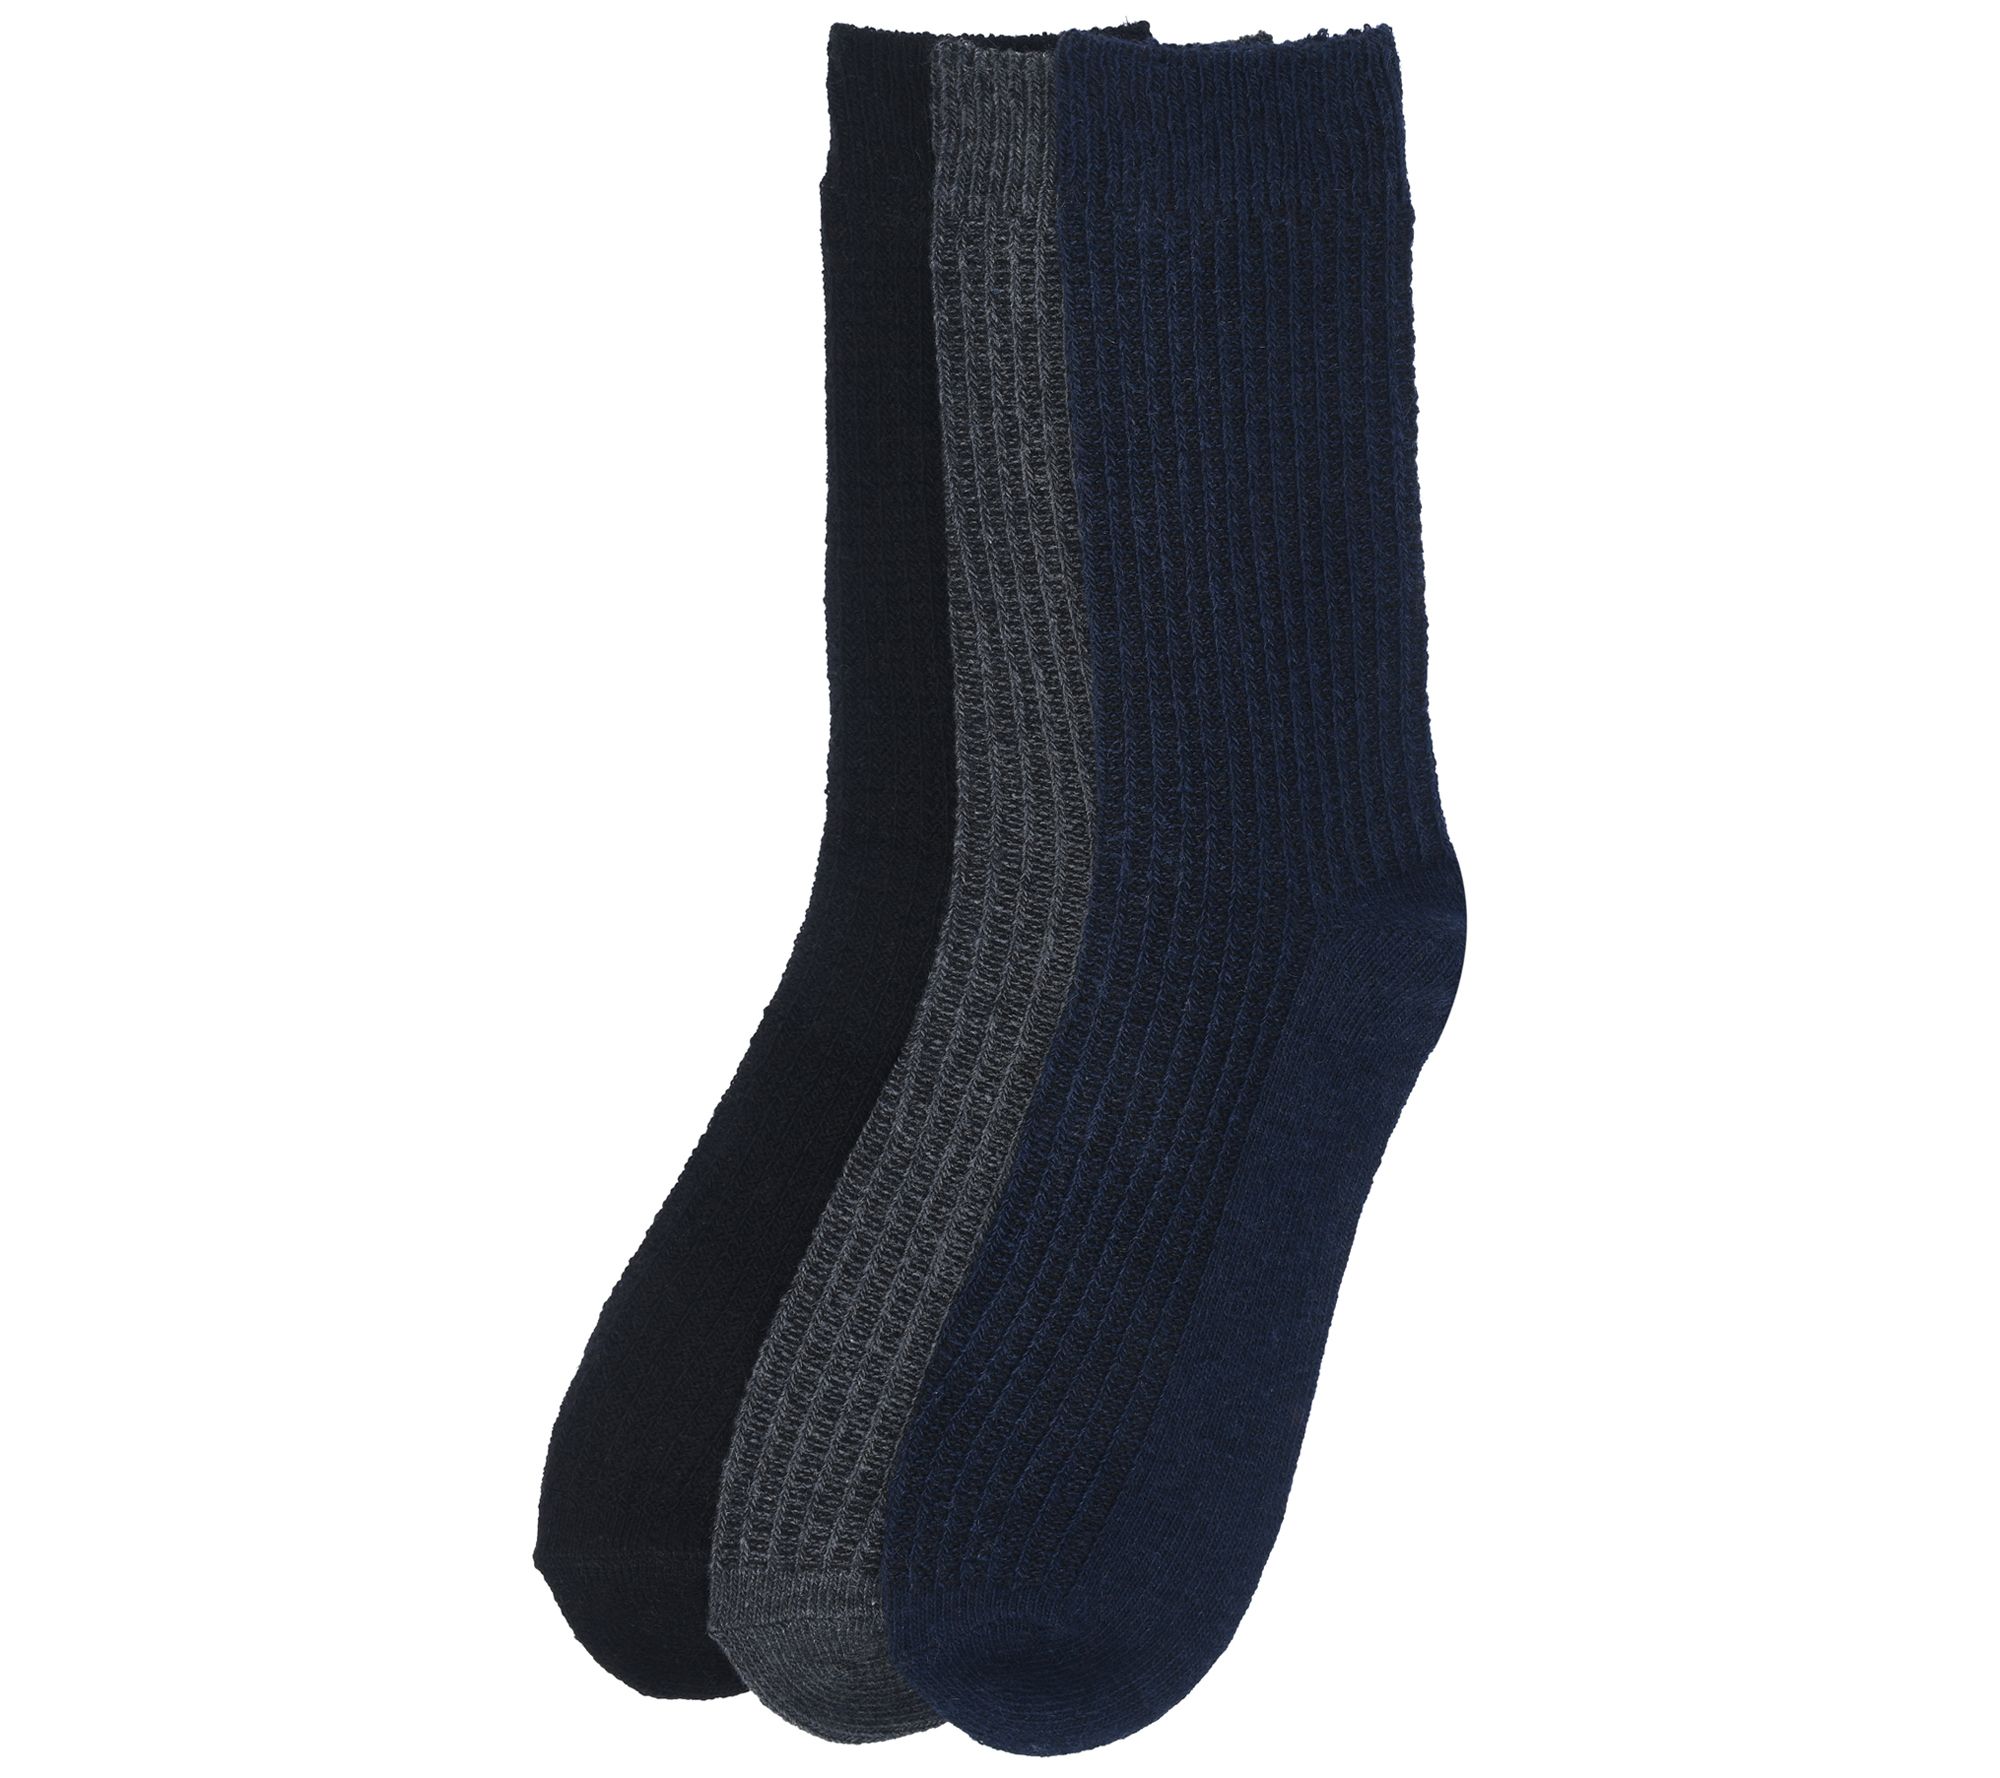 GaaHuu Women's Super Soft Cushioned Thermal Socks (2-Pair) - Pick